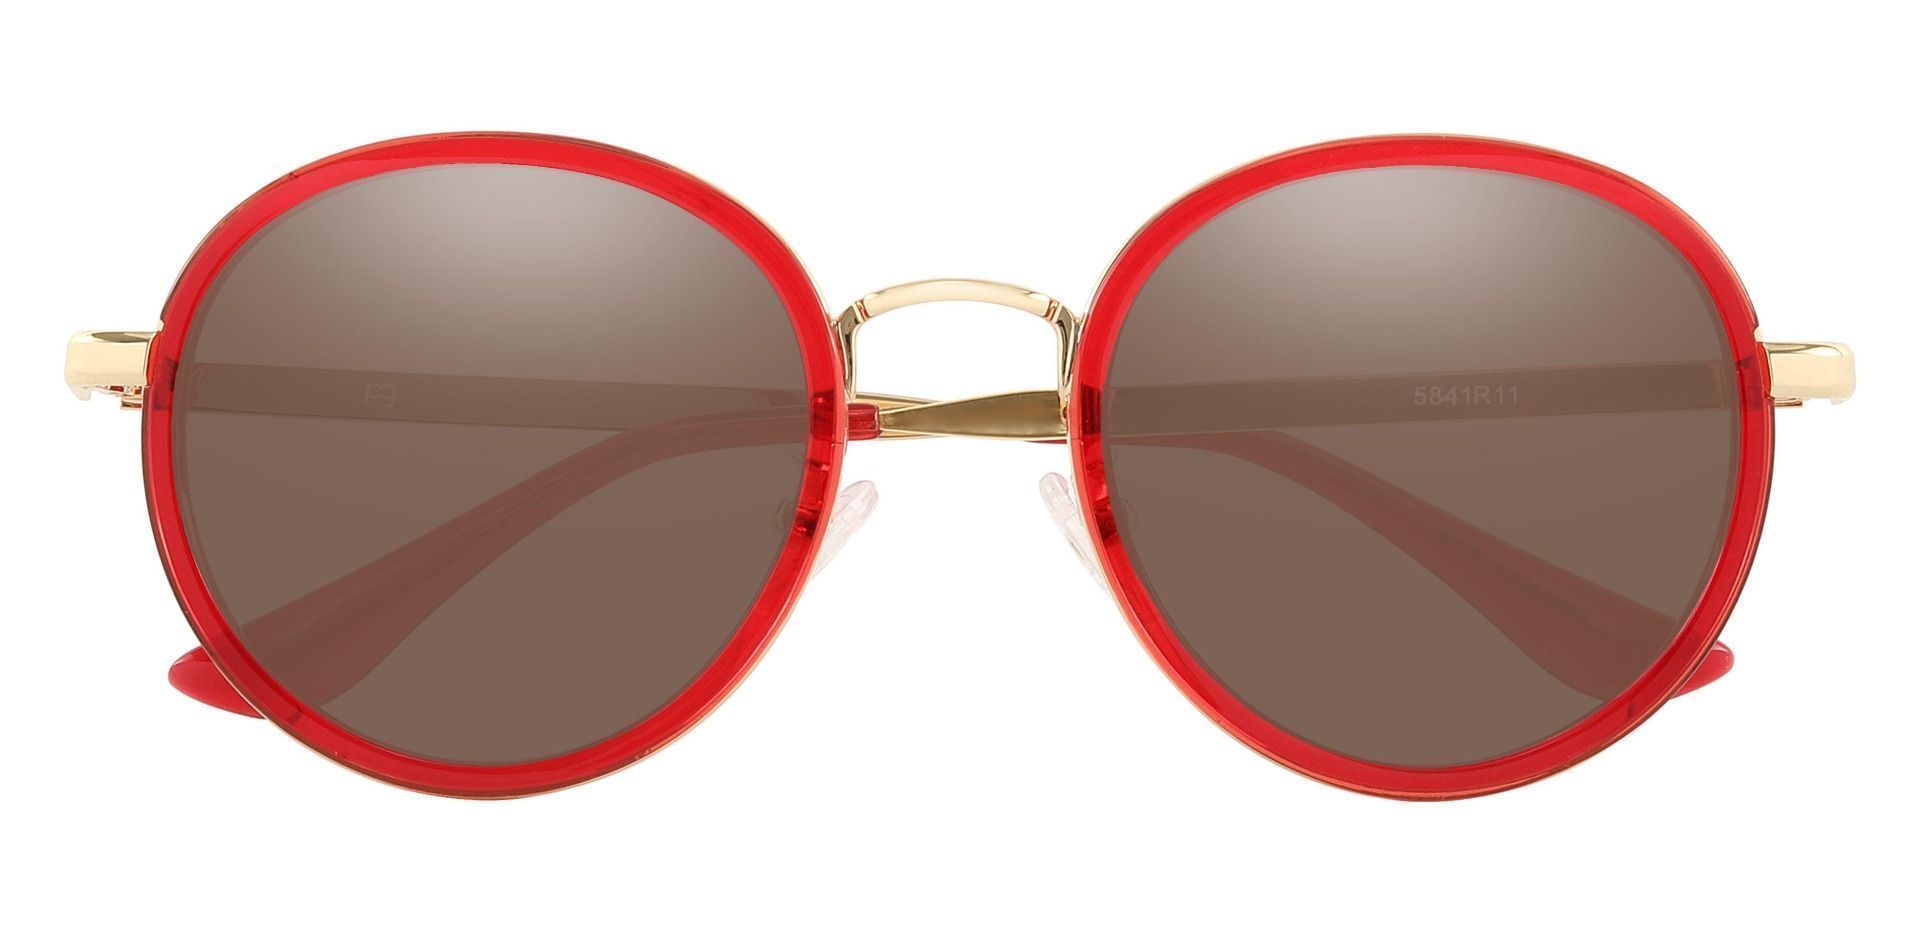 Bosco Round Prescription Sunglasses - Red Frame With Brown Lenses